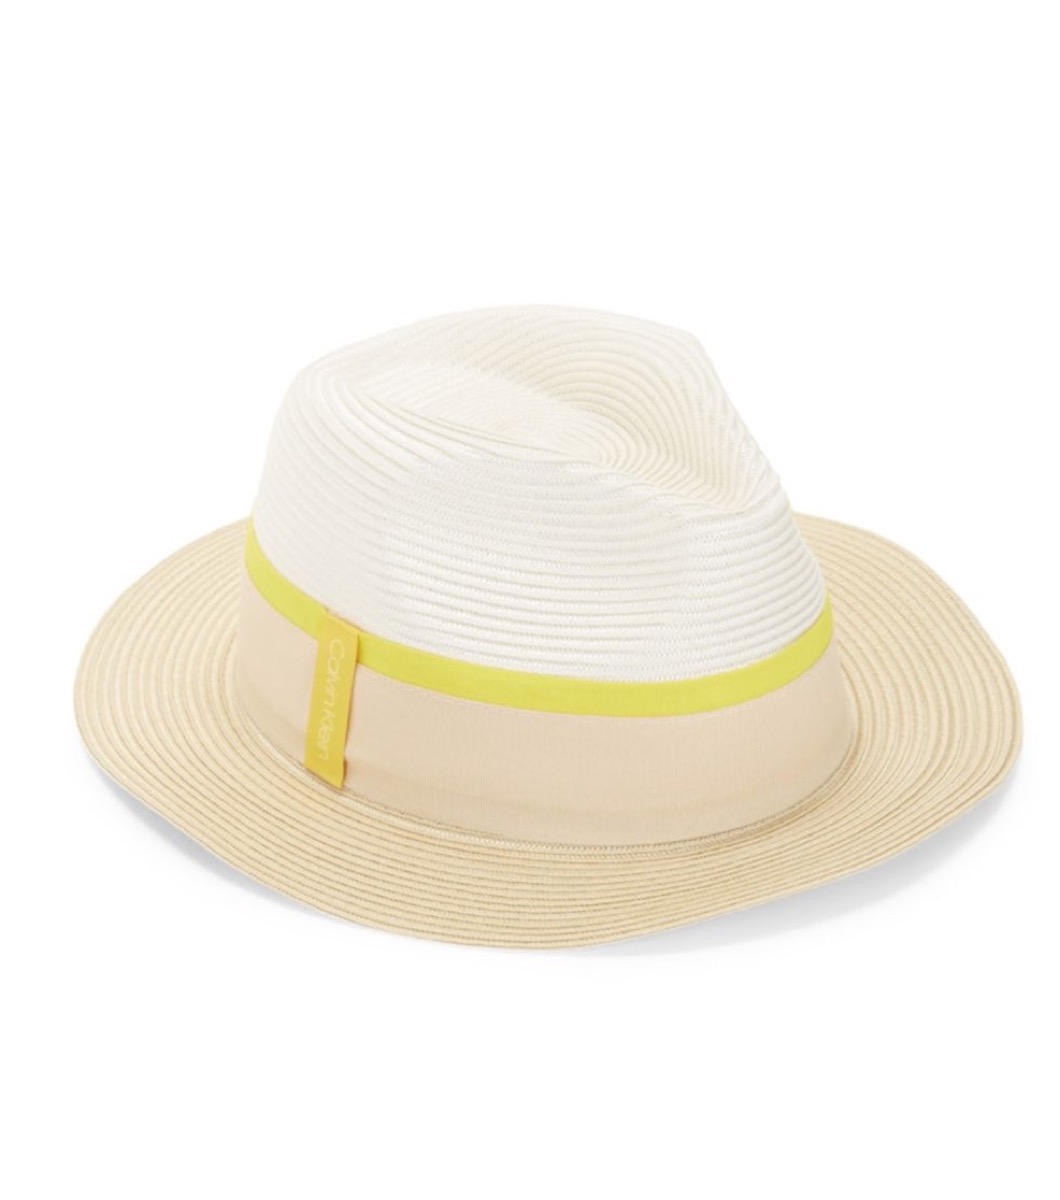 white and yellow panama hat, cheap summer hats